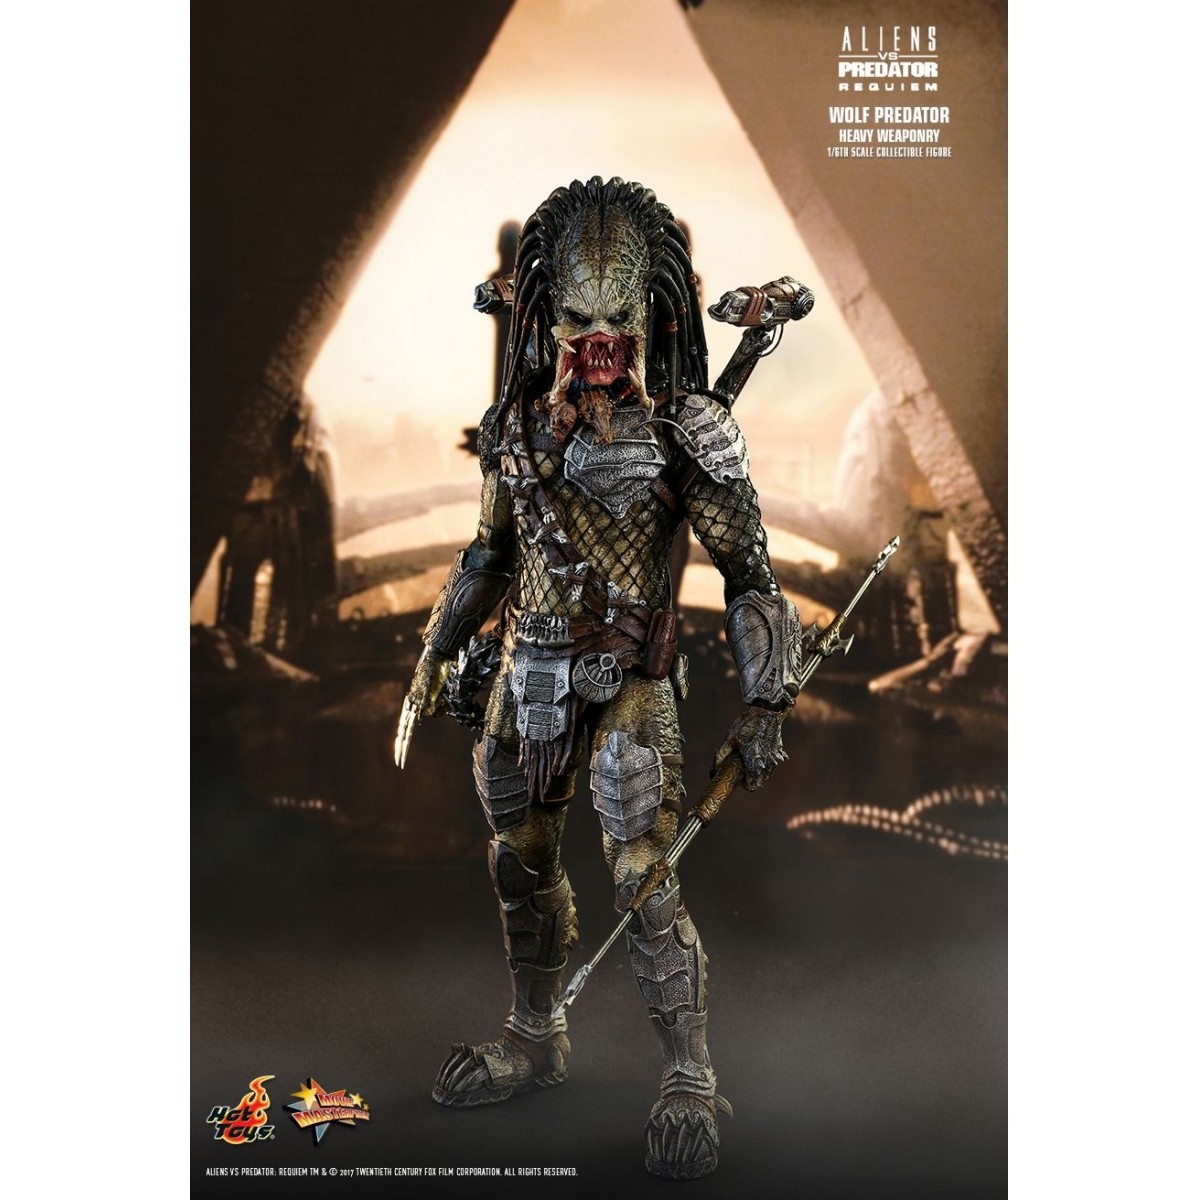 PRÉ VENDA: Boneco Wolf Predador / Predator (Heavy Weaponry): AvP (Alien vs Predator / Predator) Requiem  Escala 1/6 - Hot Toys